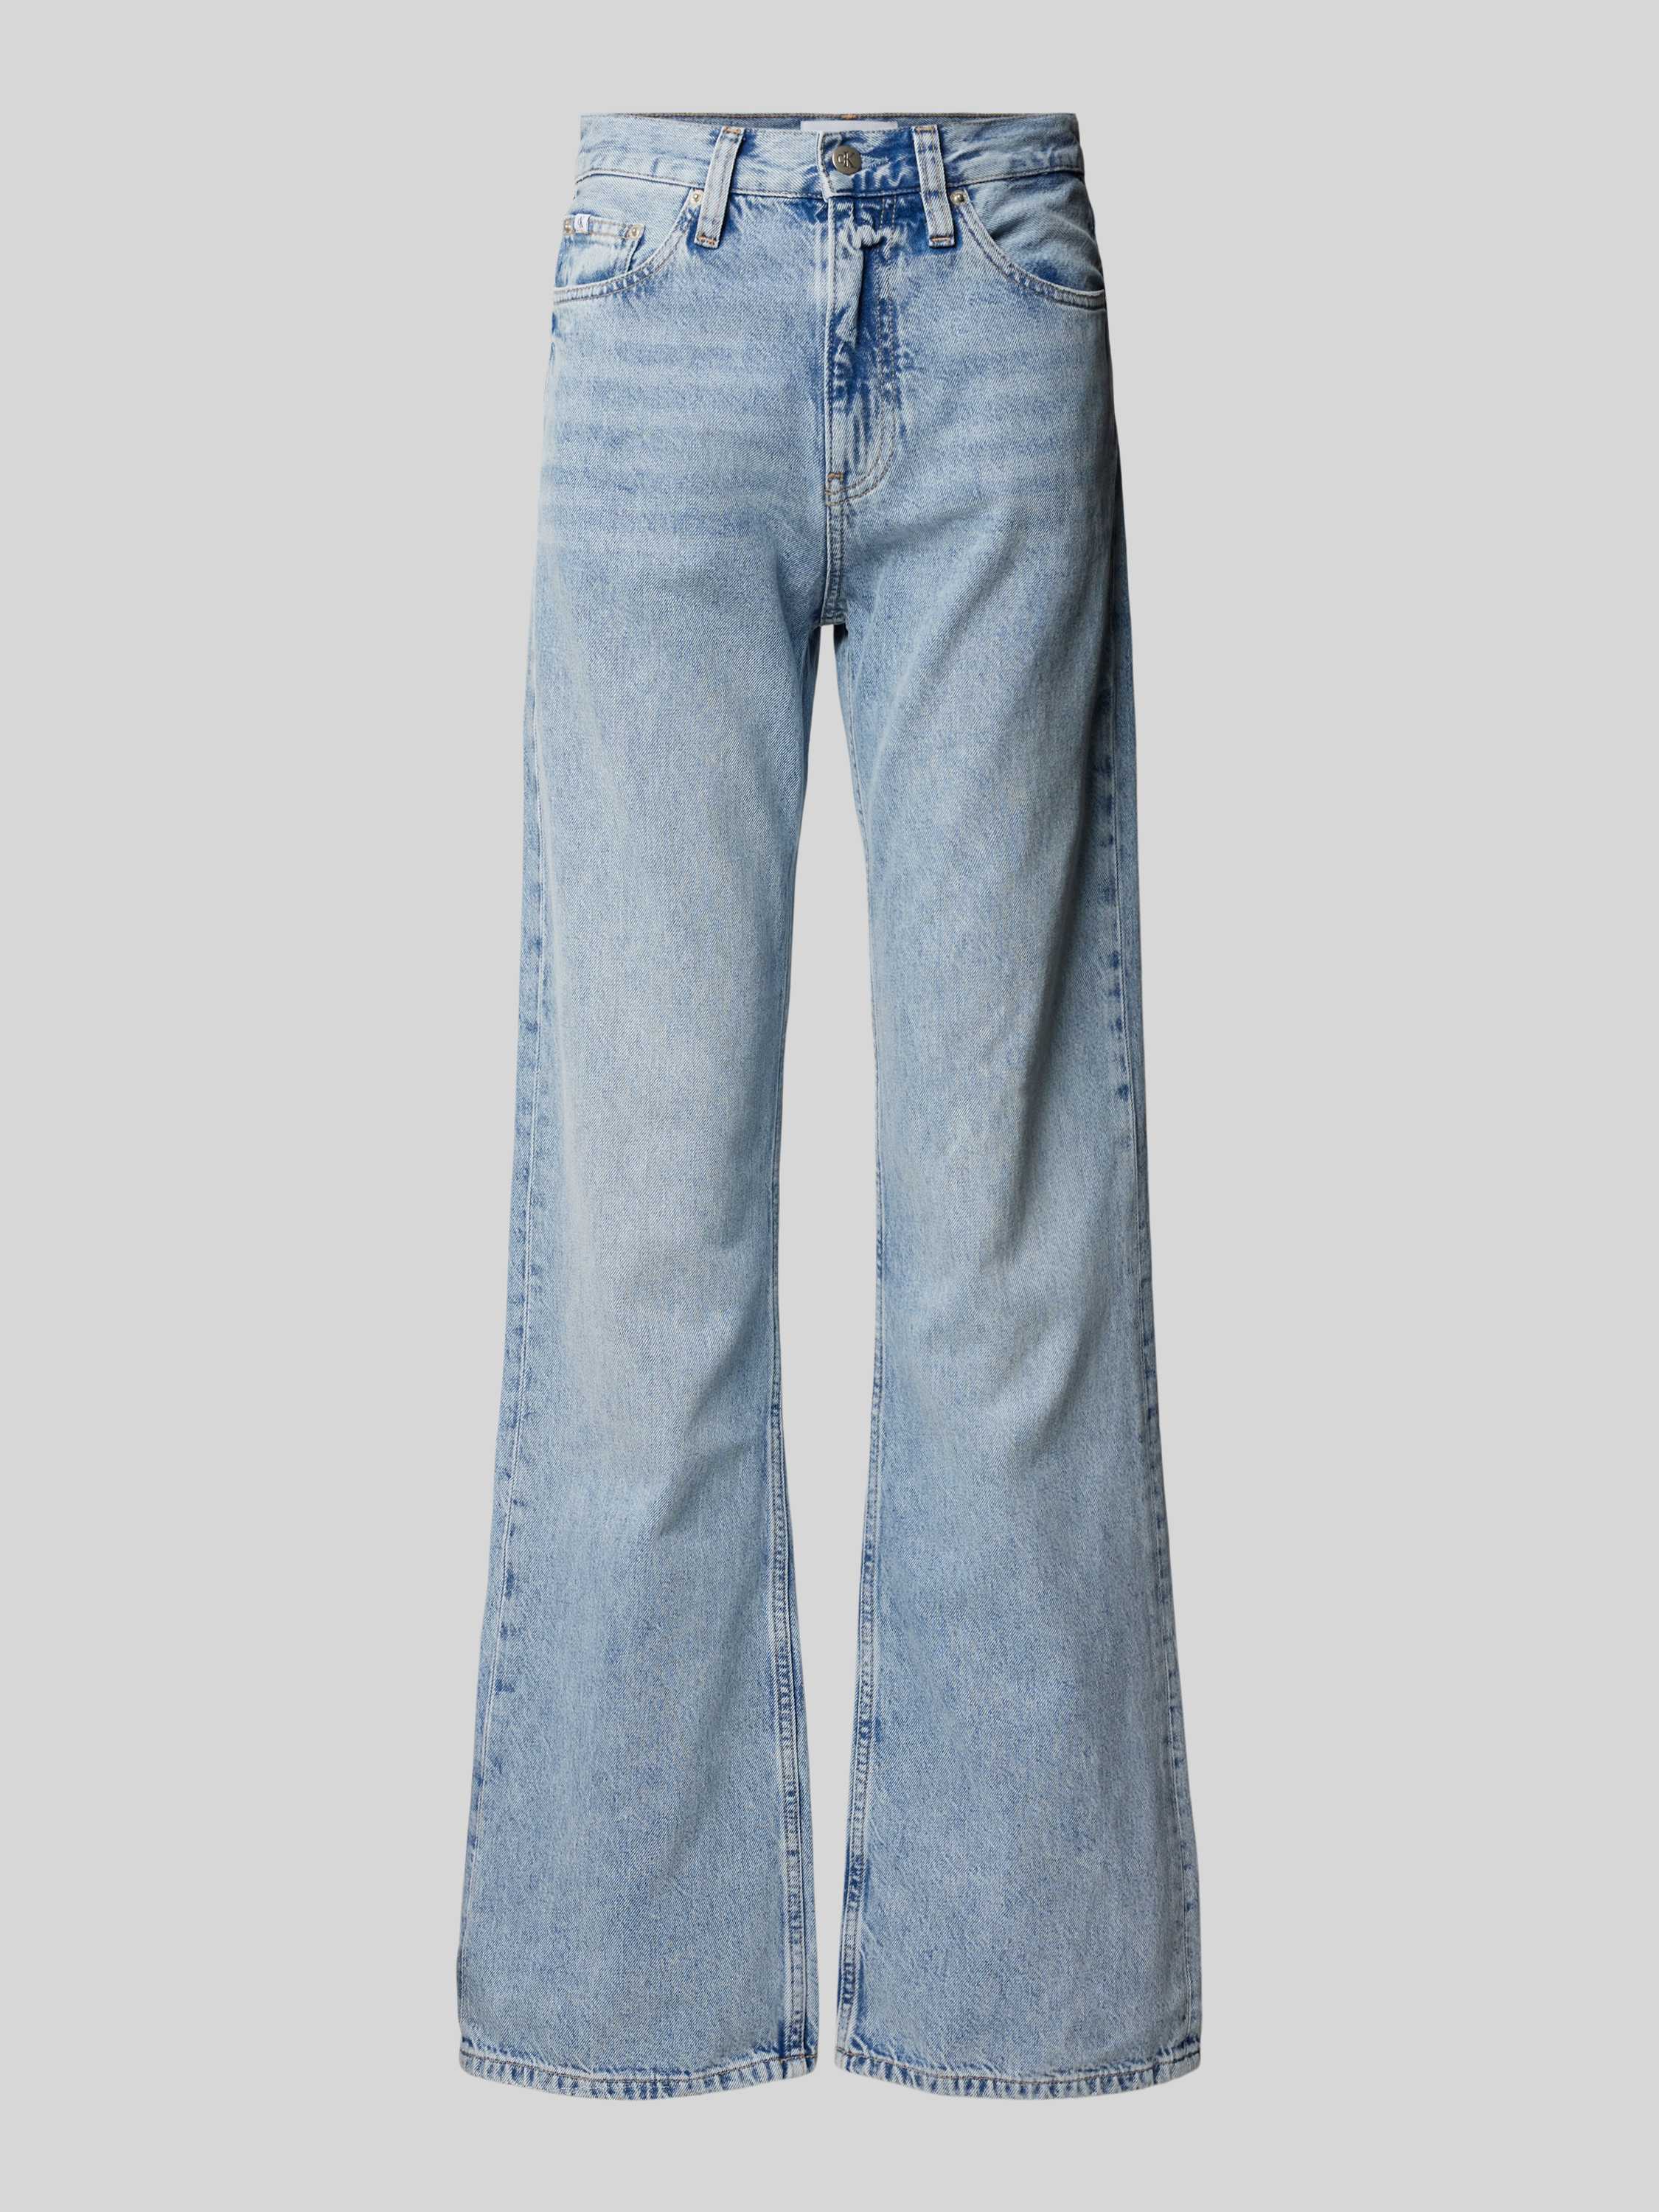 CALVIN KLEIN JEANS high waist straight jeans light blue denim